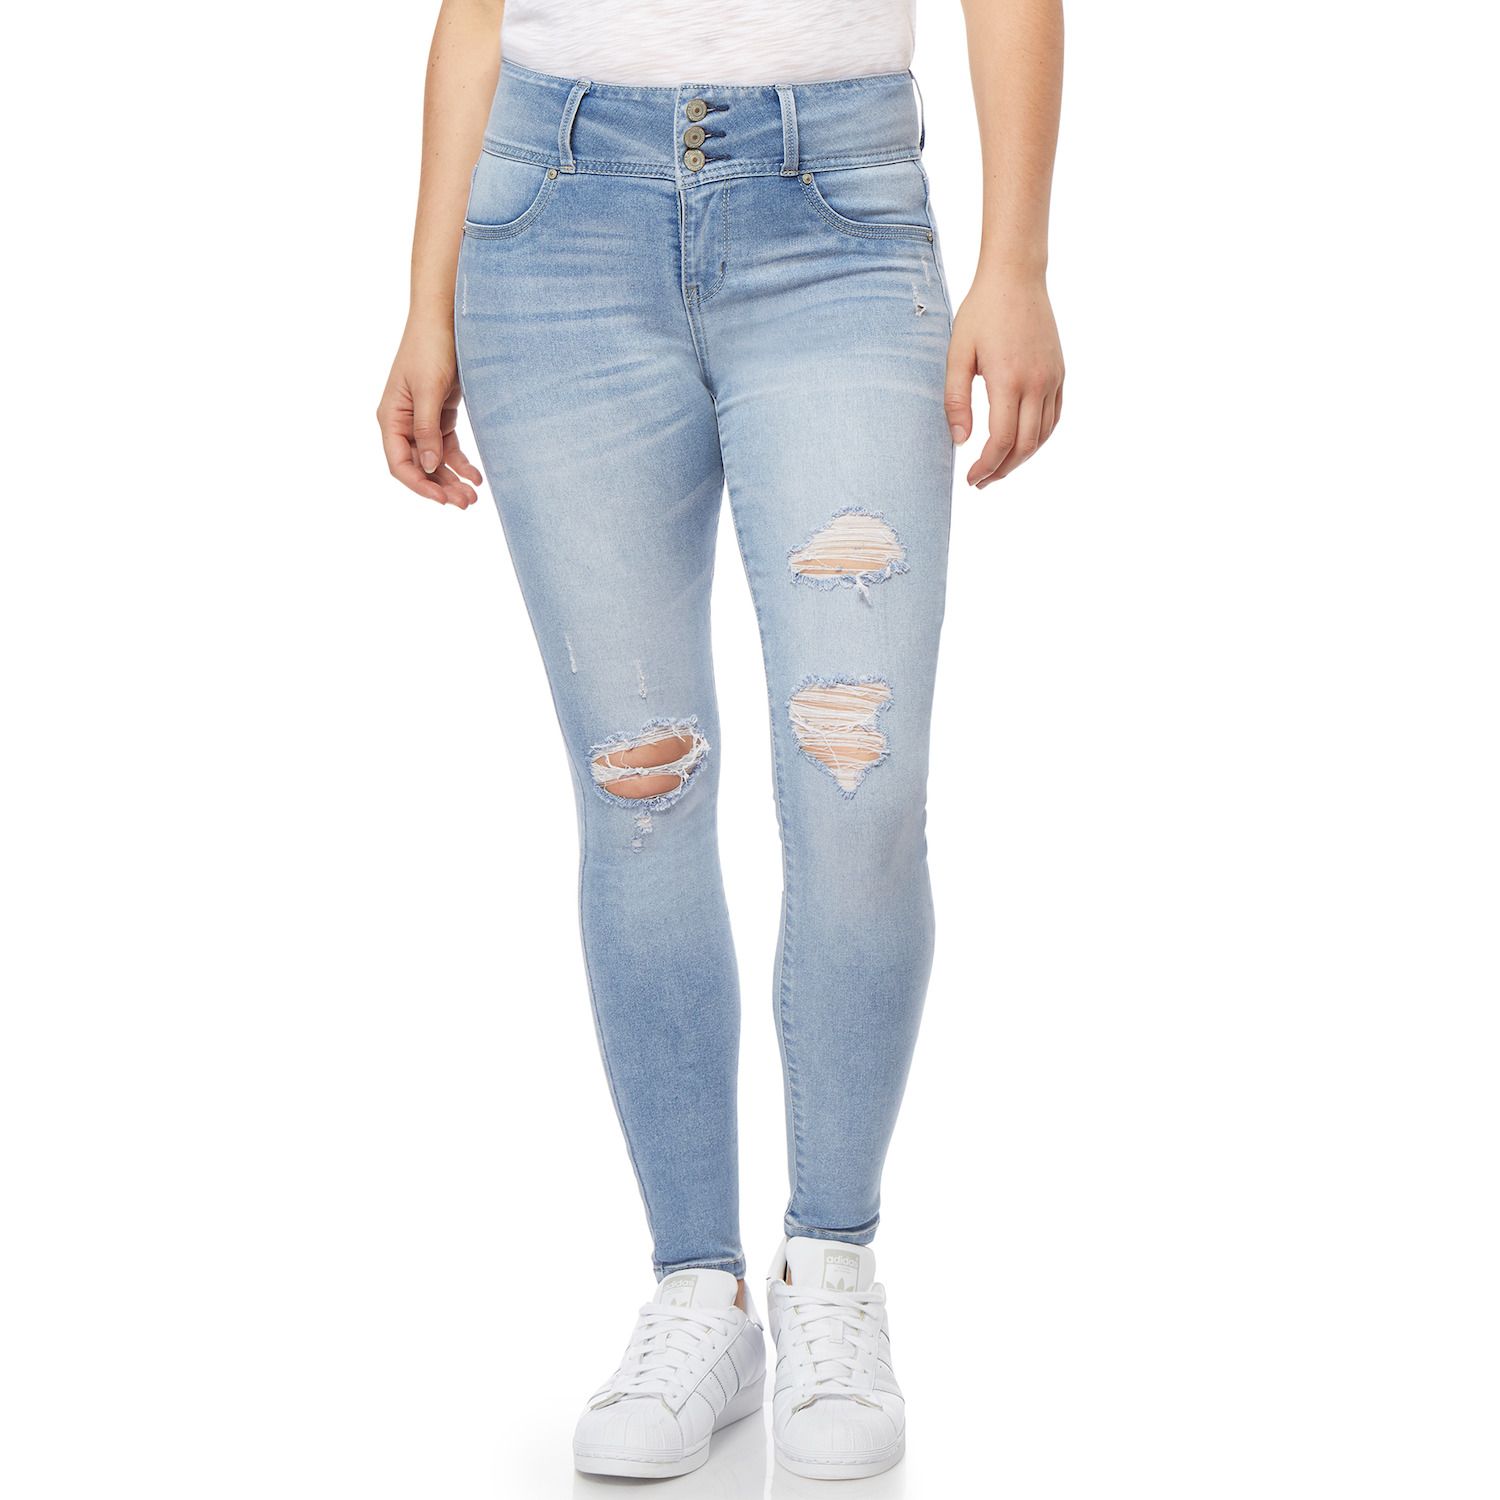 jeans for juniors under 20 dollars